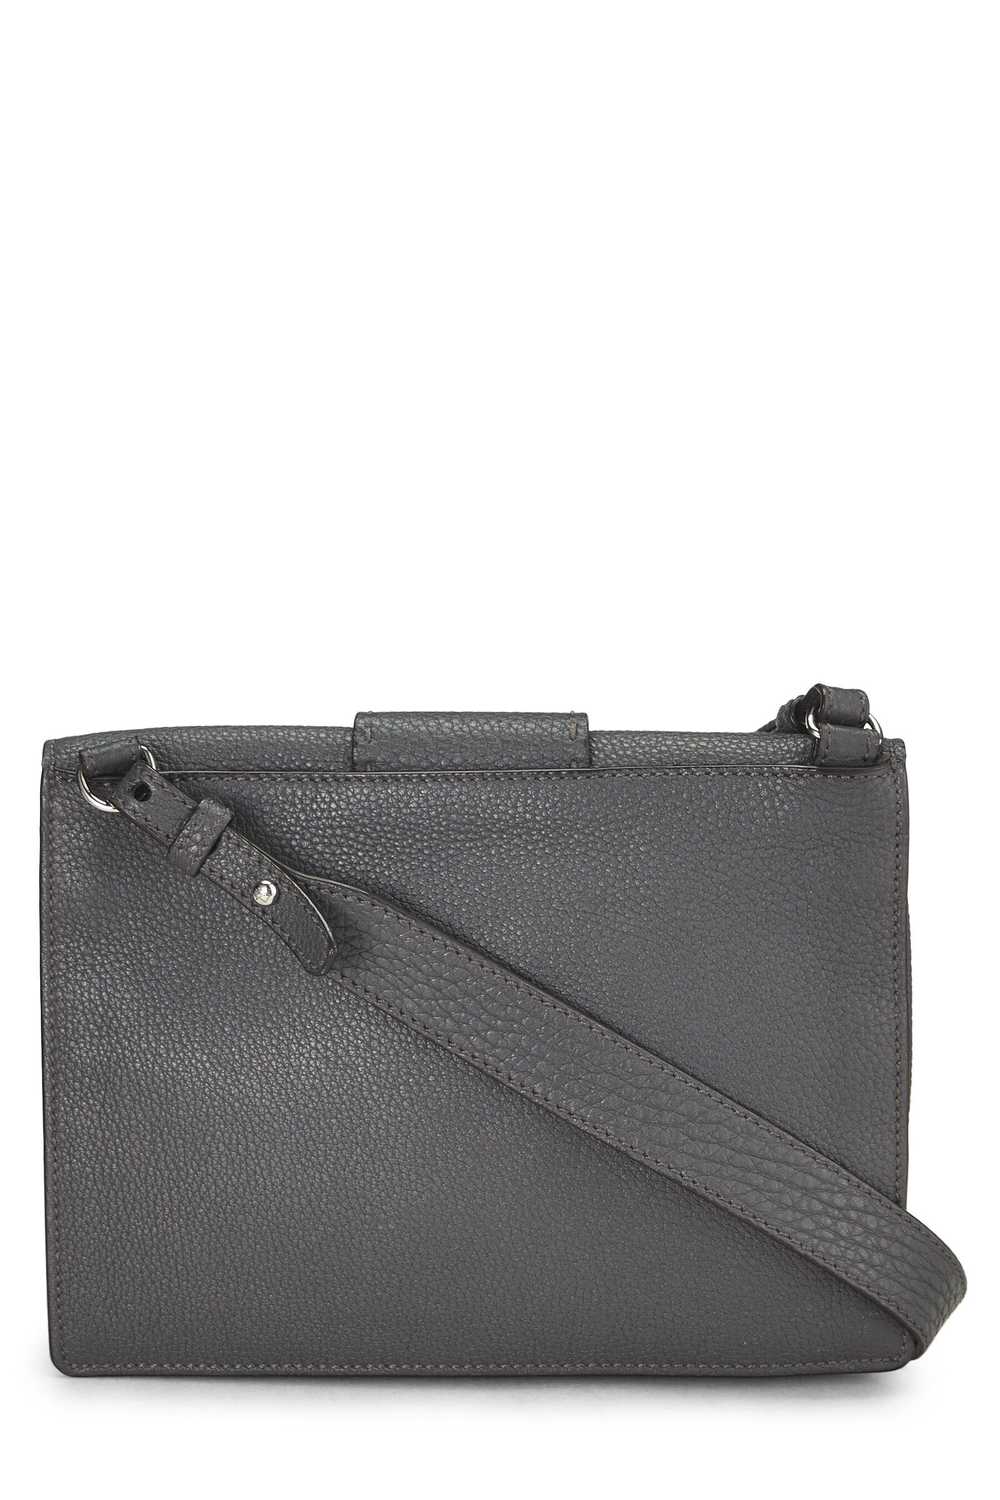 Grey Leather Flat Baguette Bag Medium - image 4